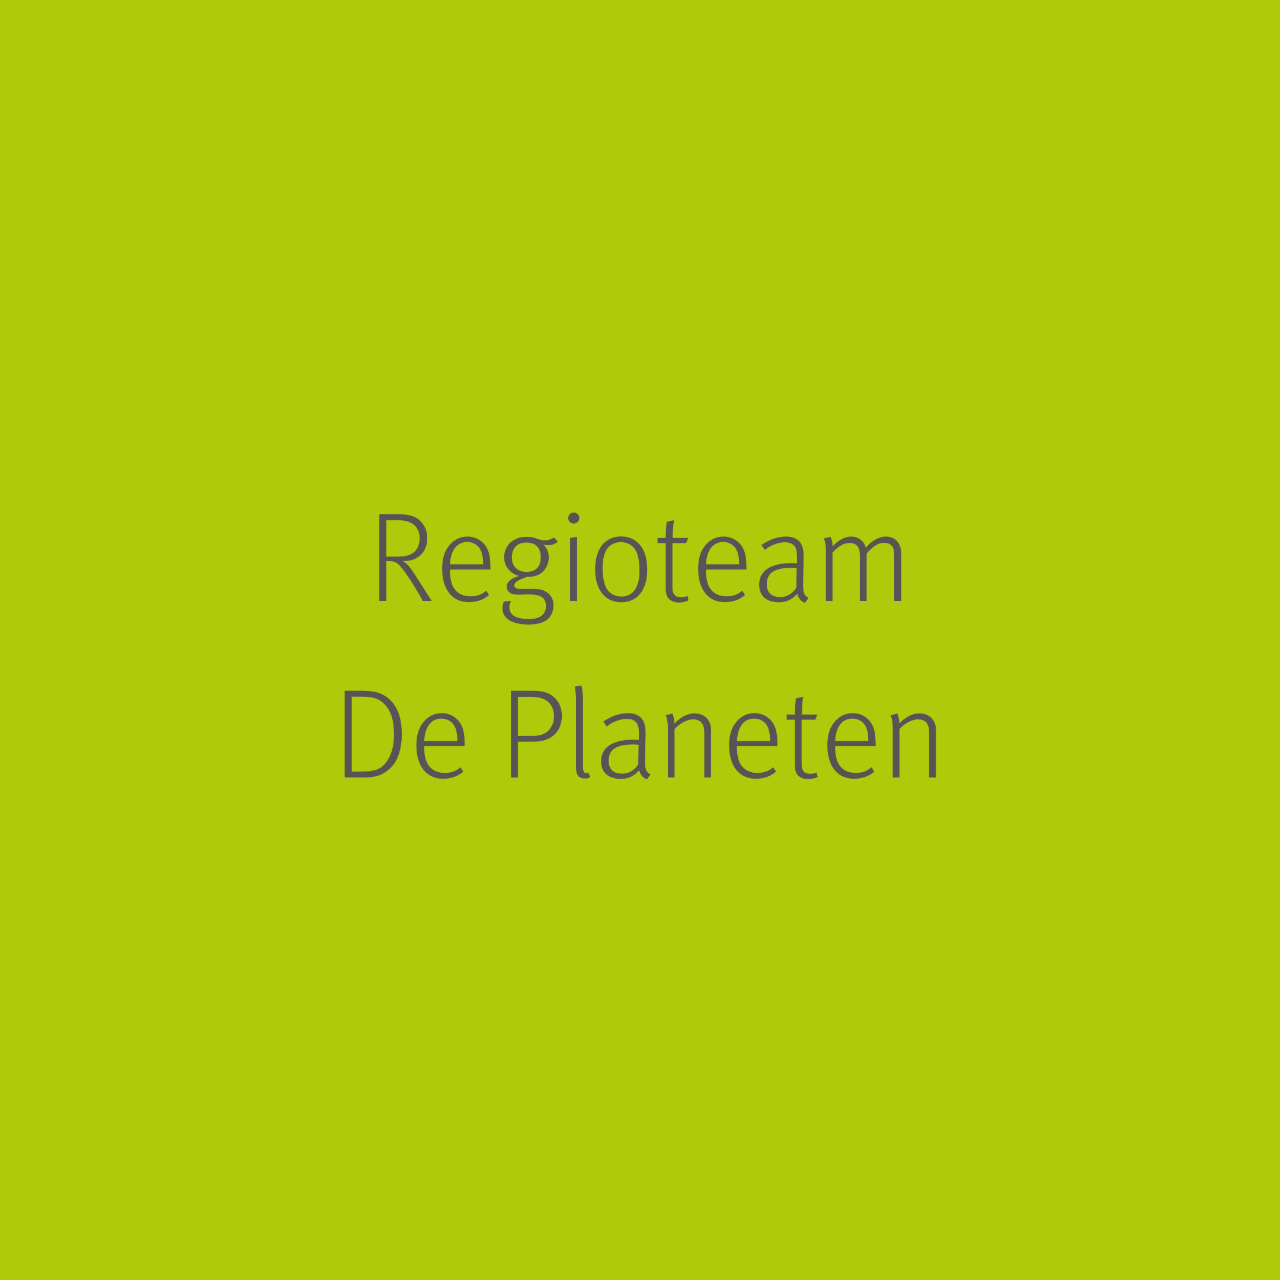 Regioteam De Planeten